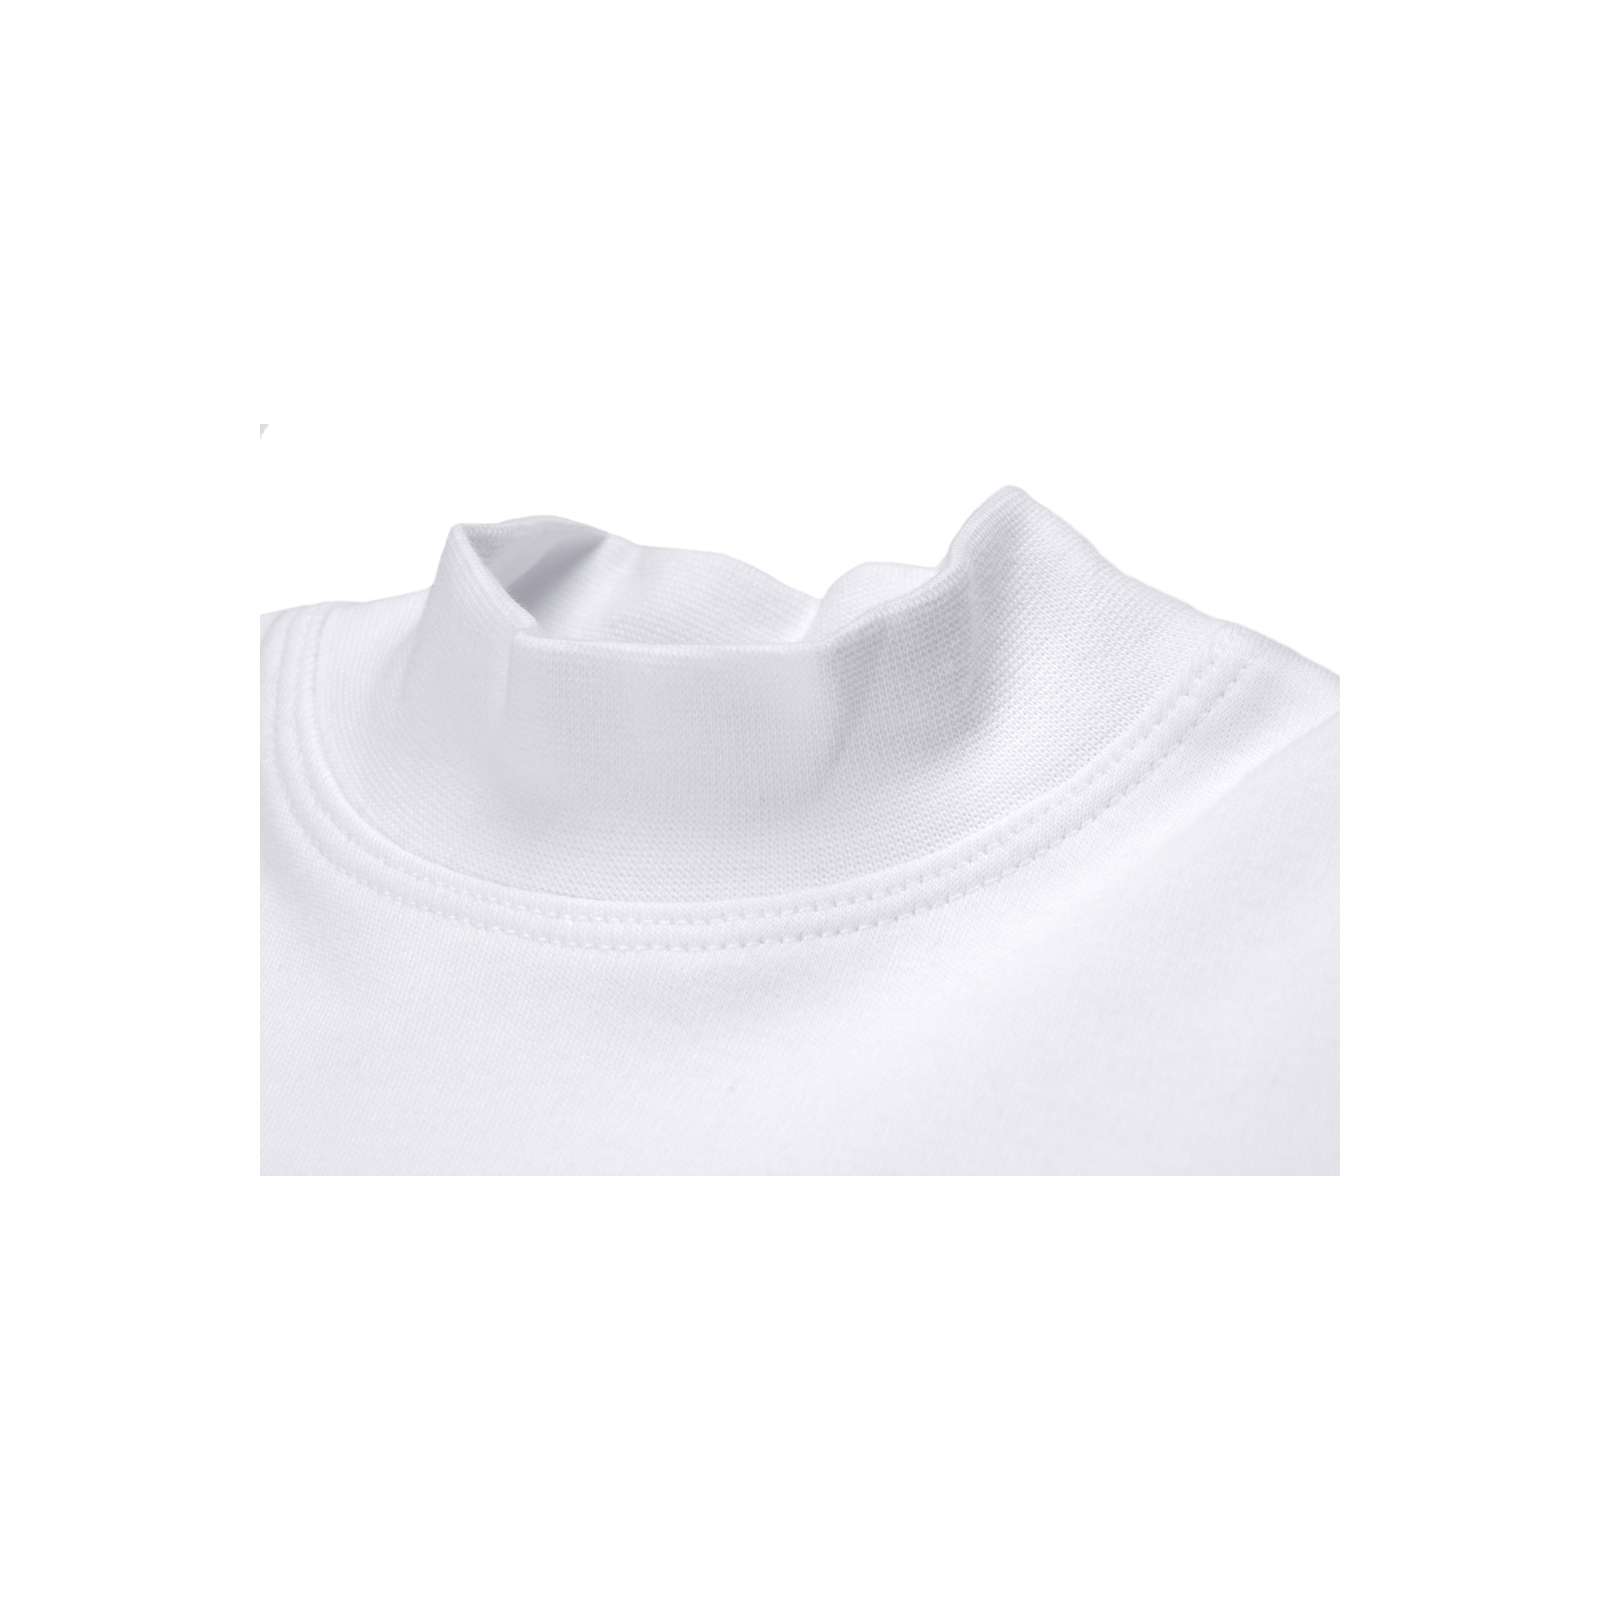 Кофта Lovetti водолазка белая (1011-92-white) изображение 3